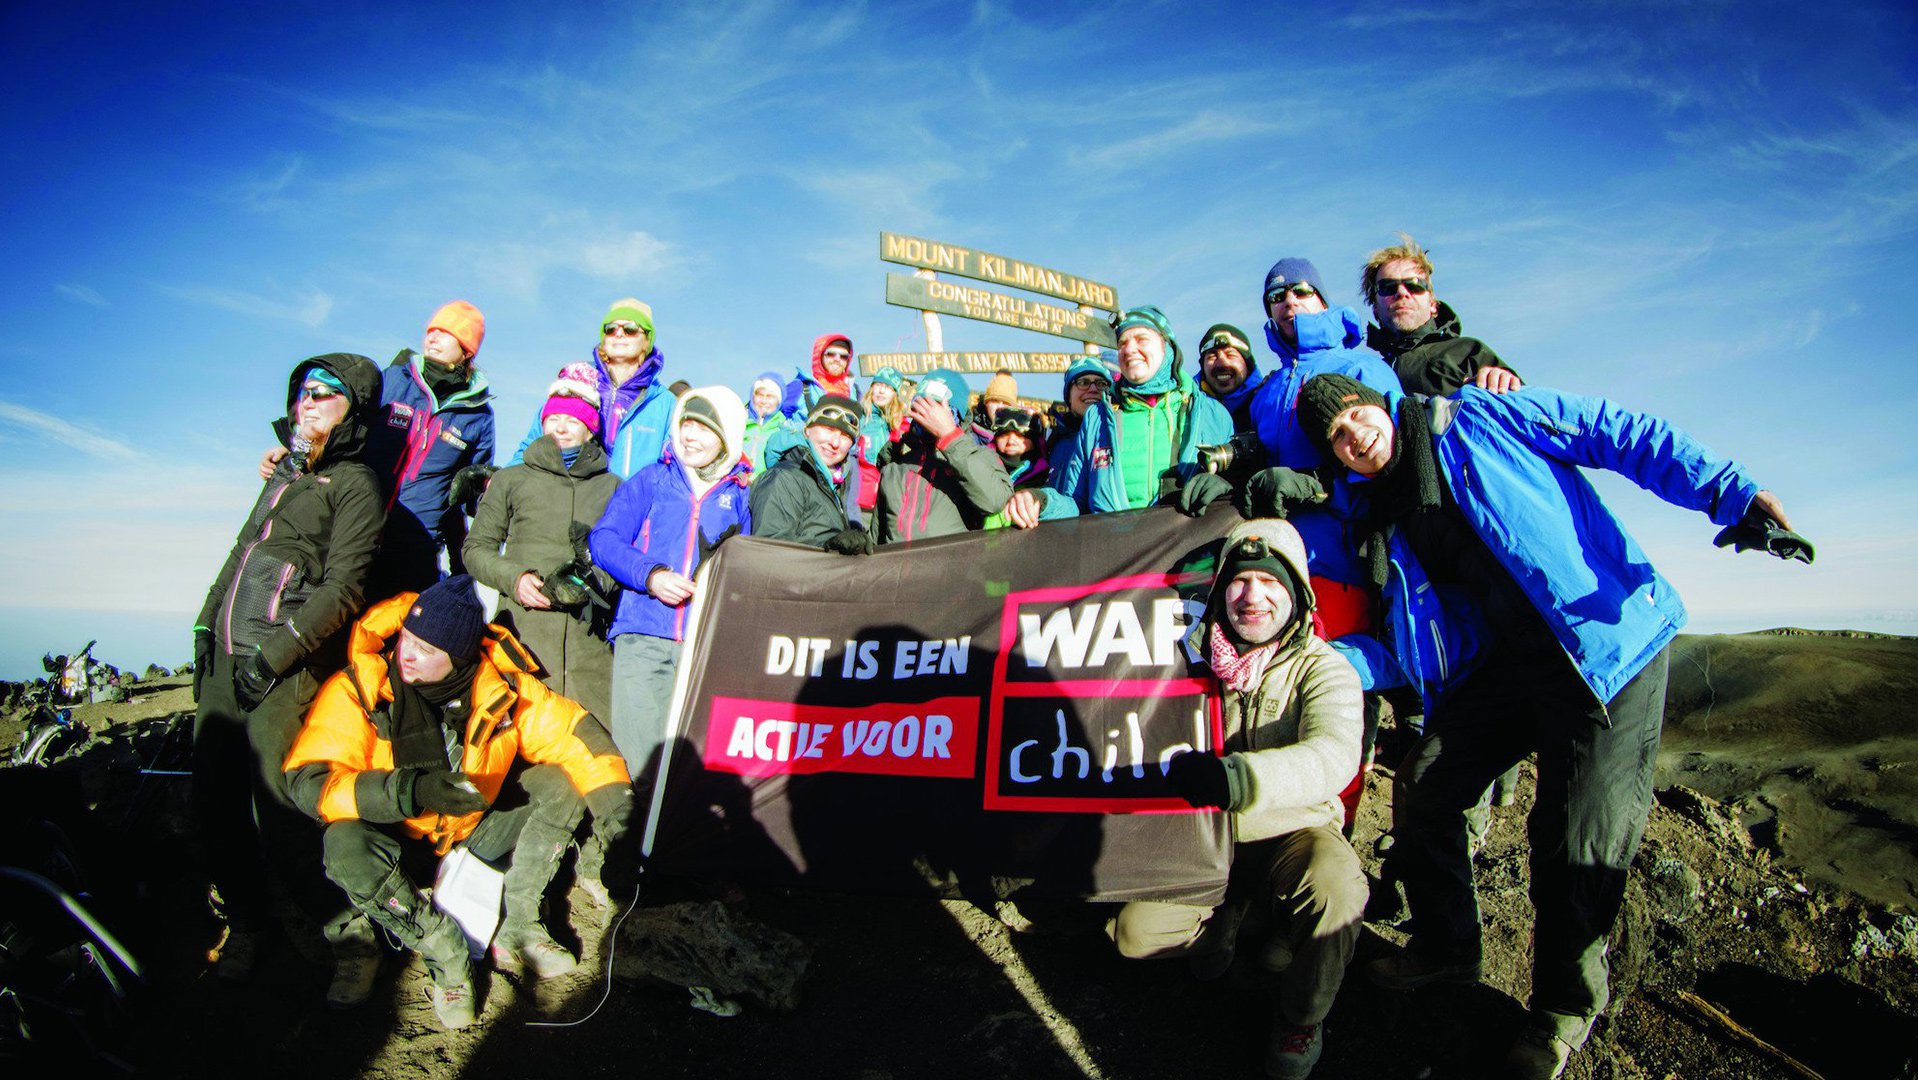 Climbing Mount Kilimanjaro with War Child - Kili-Challenge